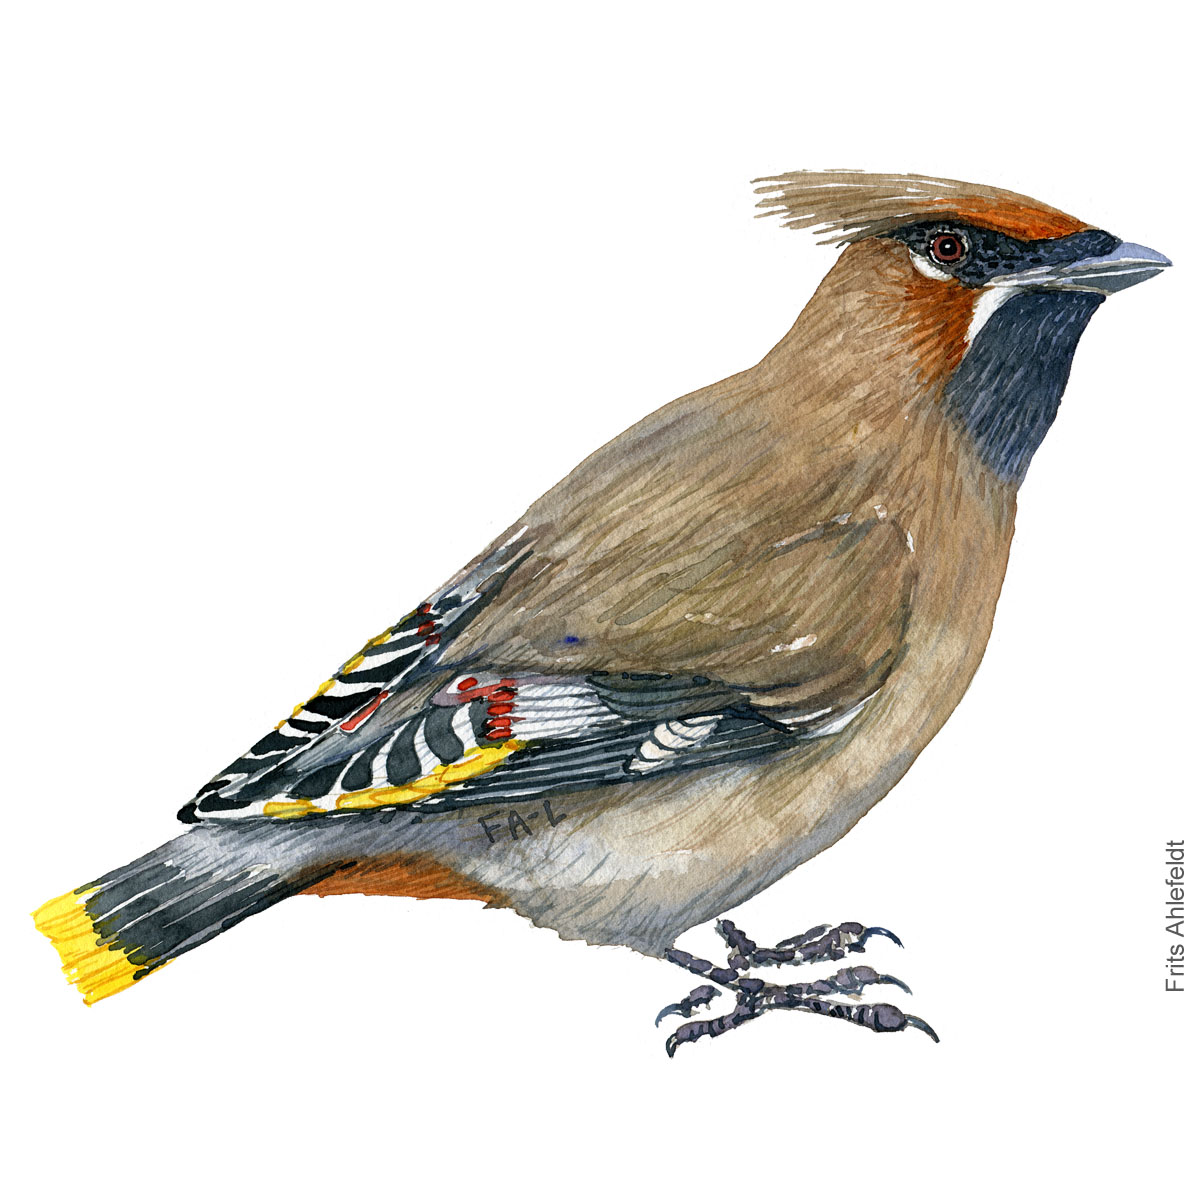 Silkehale - Bohemian waxwing bird watercolor illustration. Painting by Frits Ahlefeldt. Fugle akvarel